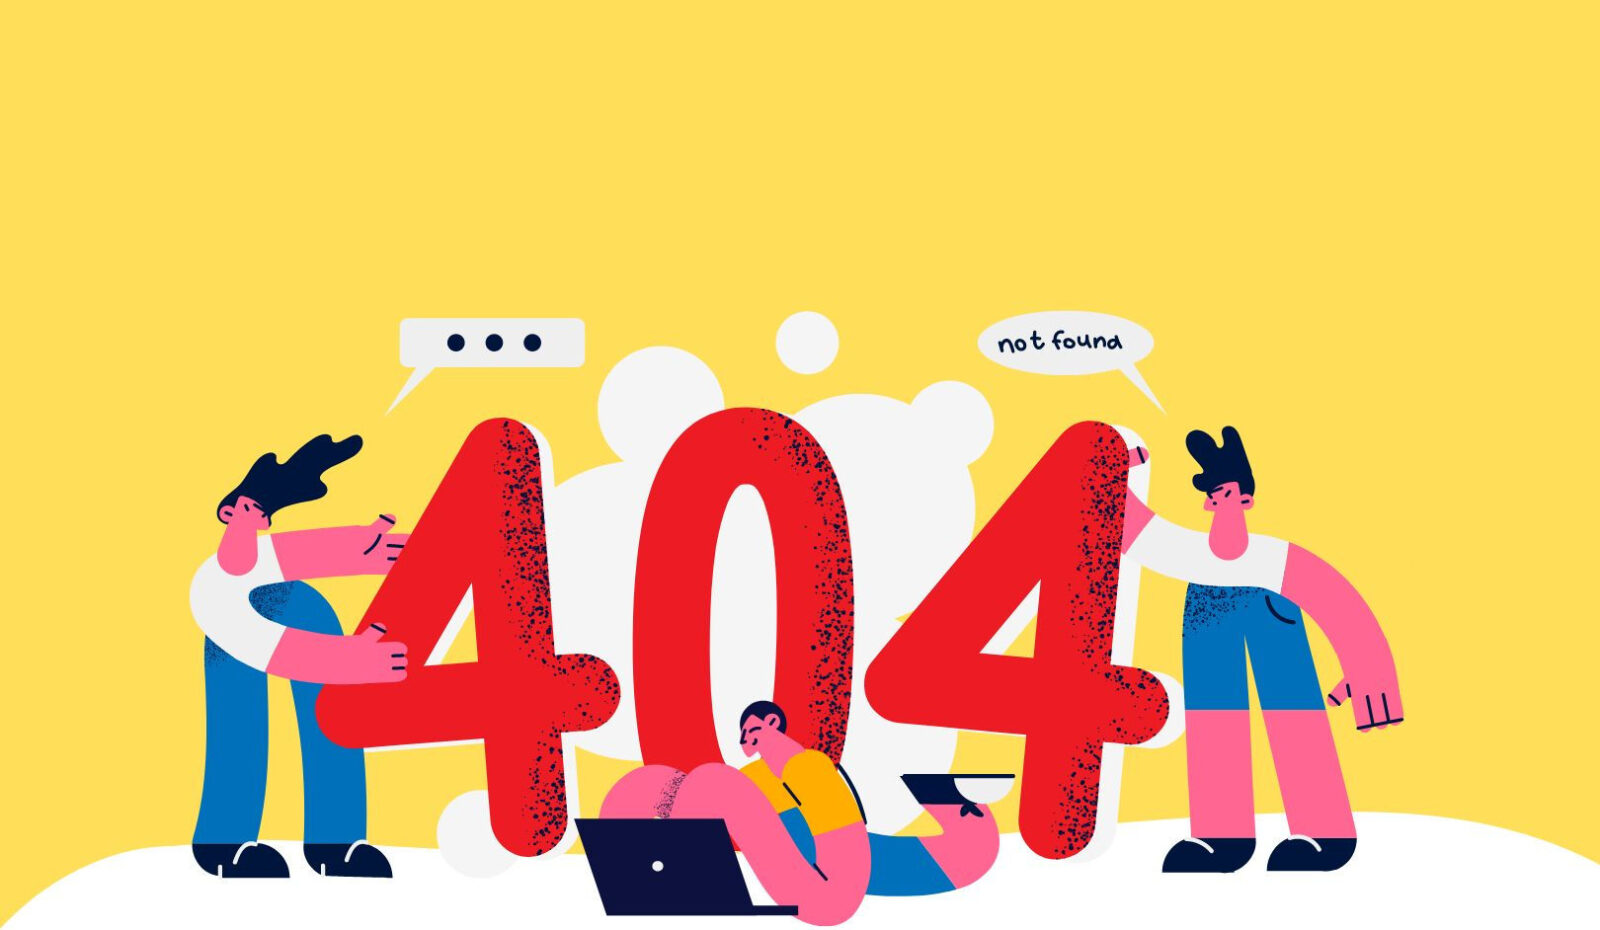 404 error illustration